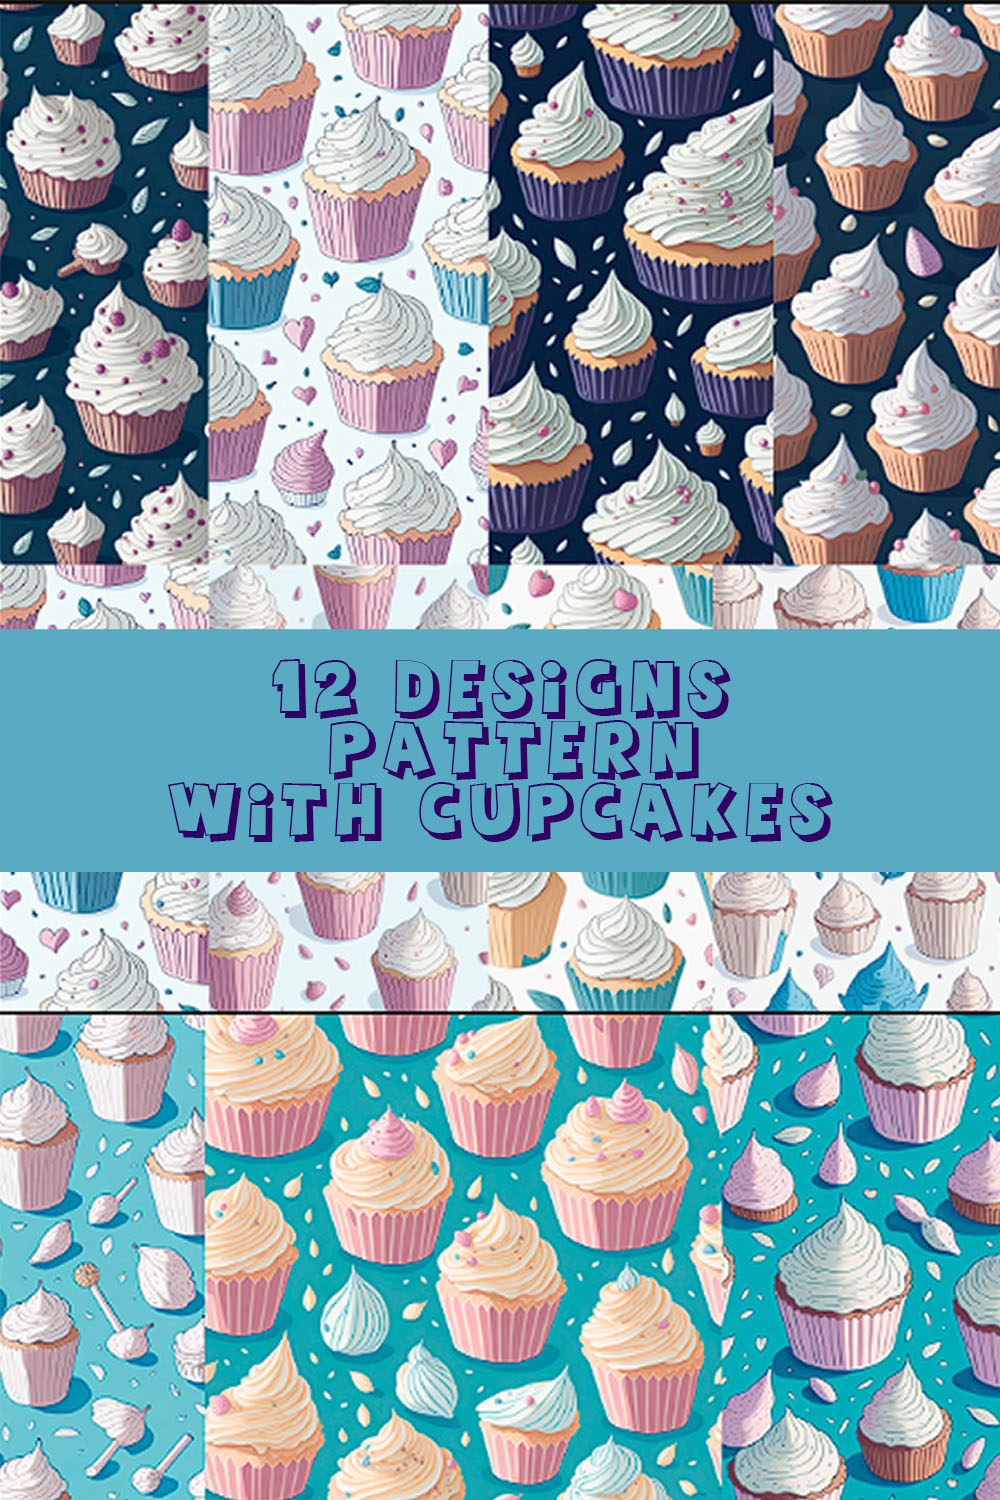 pattern cupcakes designs 12 pieces pinterest preview image.